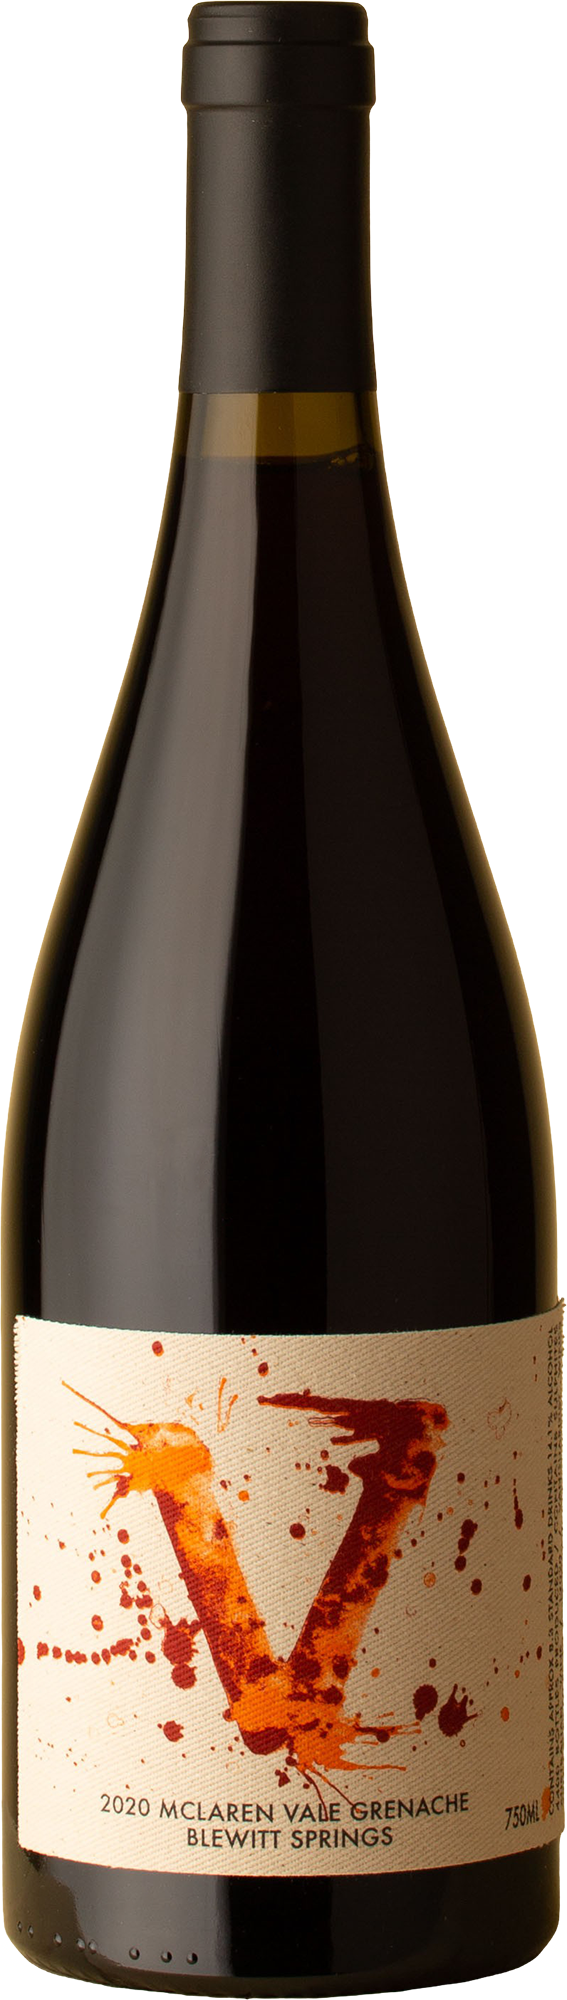 Vanguardist - Blewitt Springs Grenache 2020 Red Wine